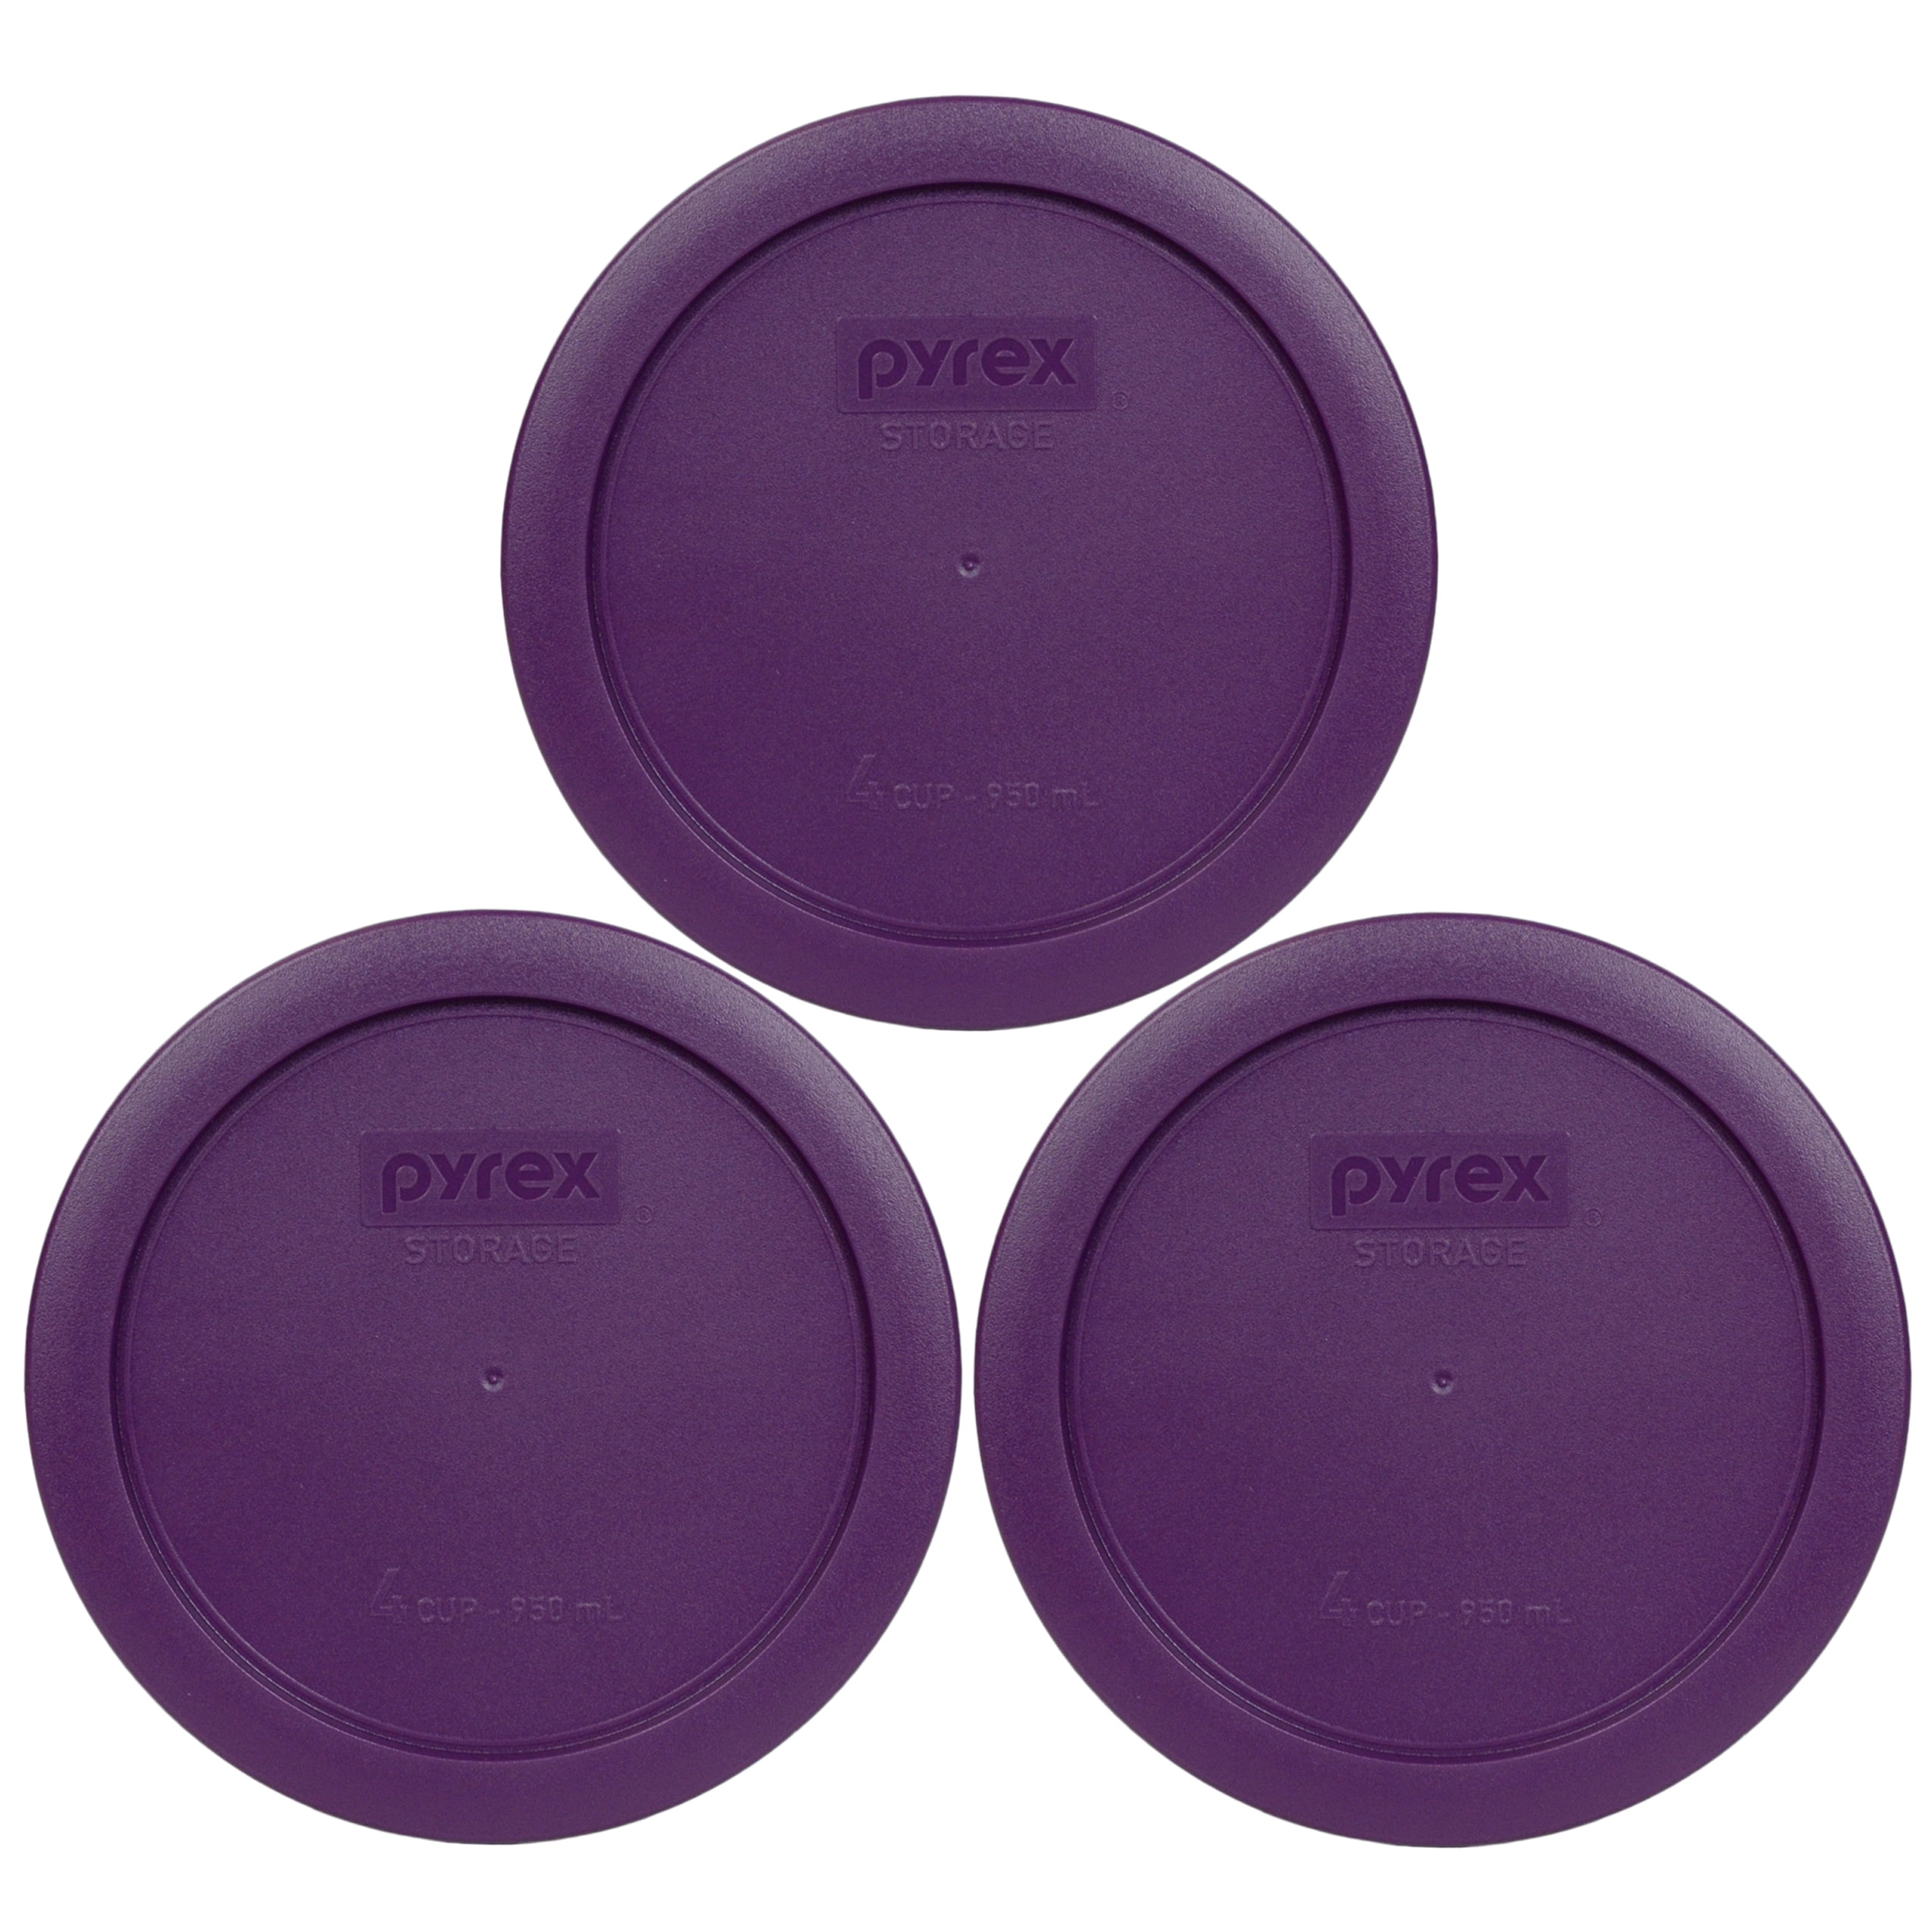 My First Pyrex + - Round Baby Food Storage Purple- 11x6 cm - 0,2 L - Pyrex®  Webshop AR